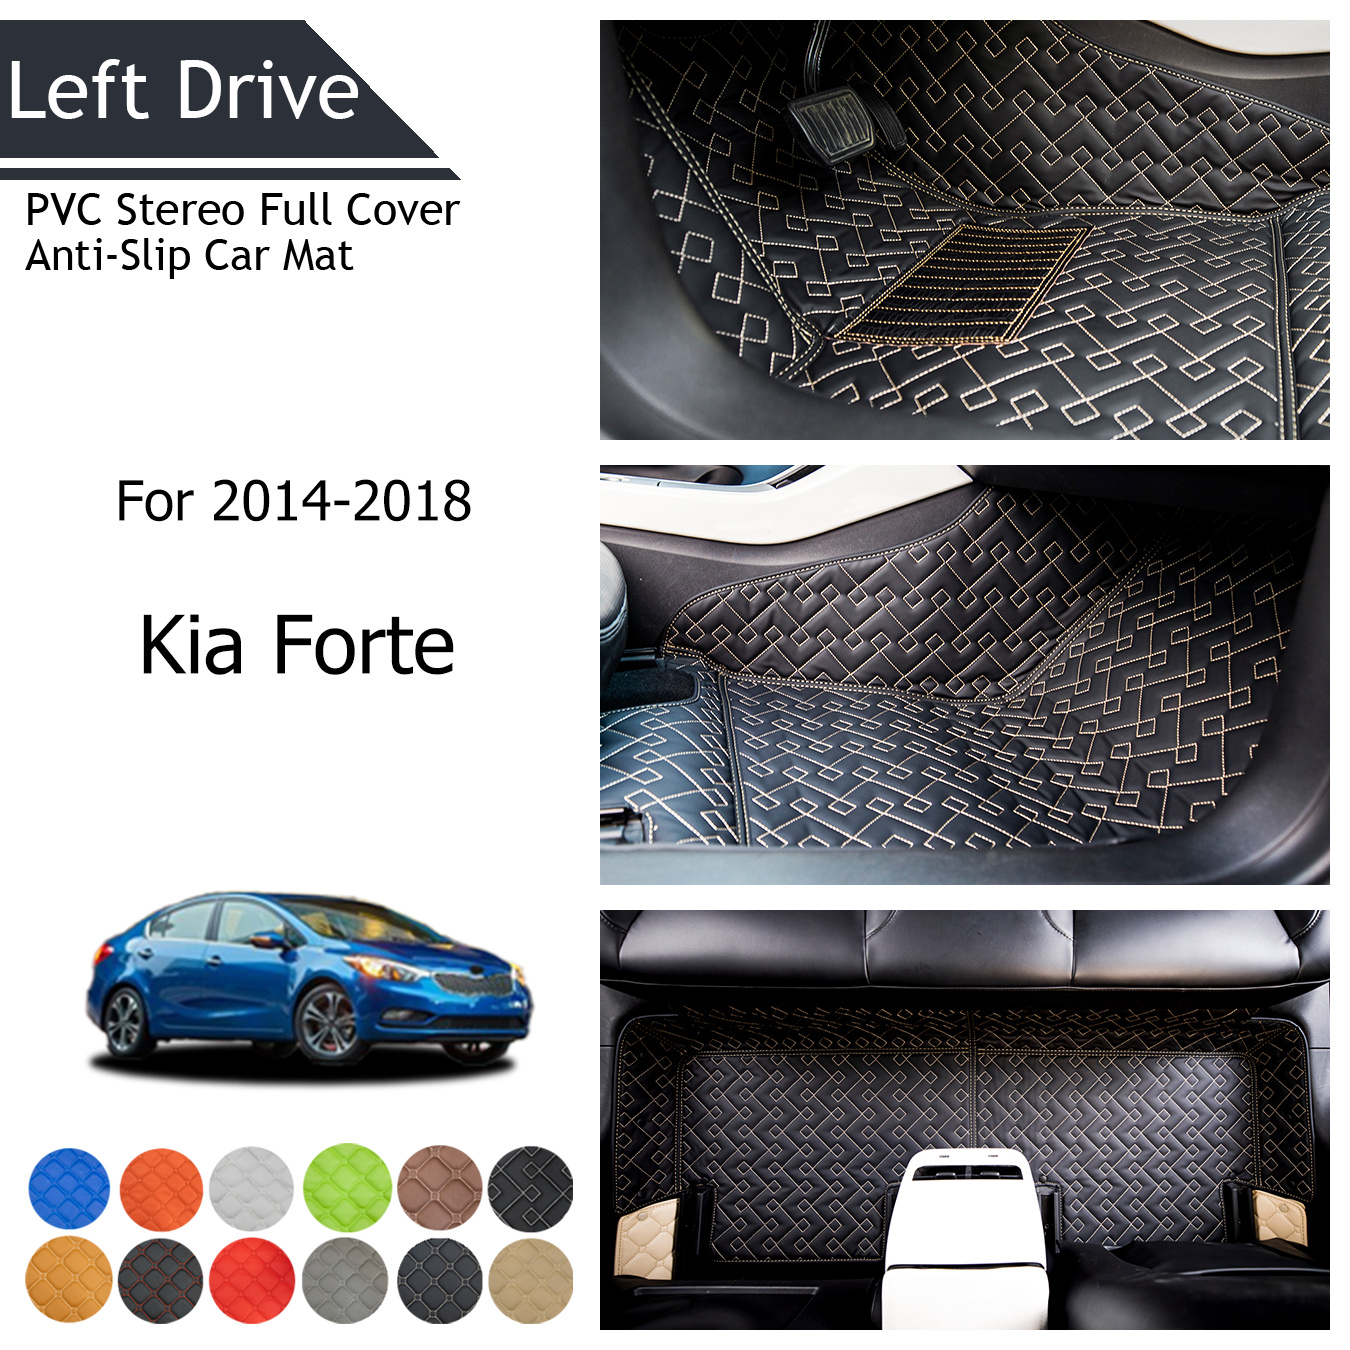 

Tegart[lhd]fits For 2014-2018 Kia Forte 3 Layer Pvc Stereo Full Cover Anti-slip Car Mat